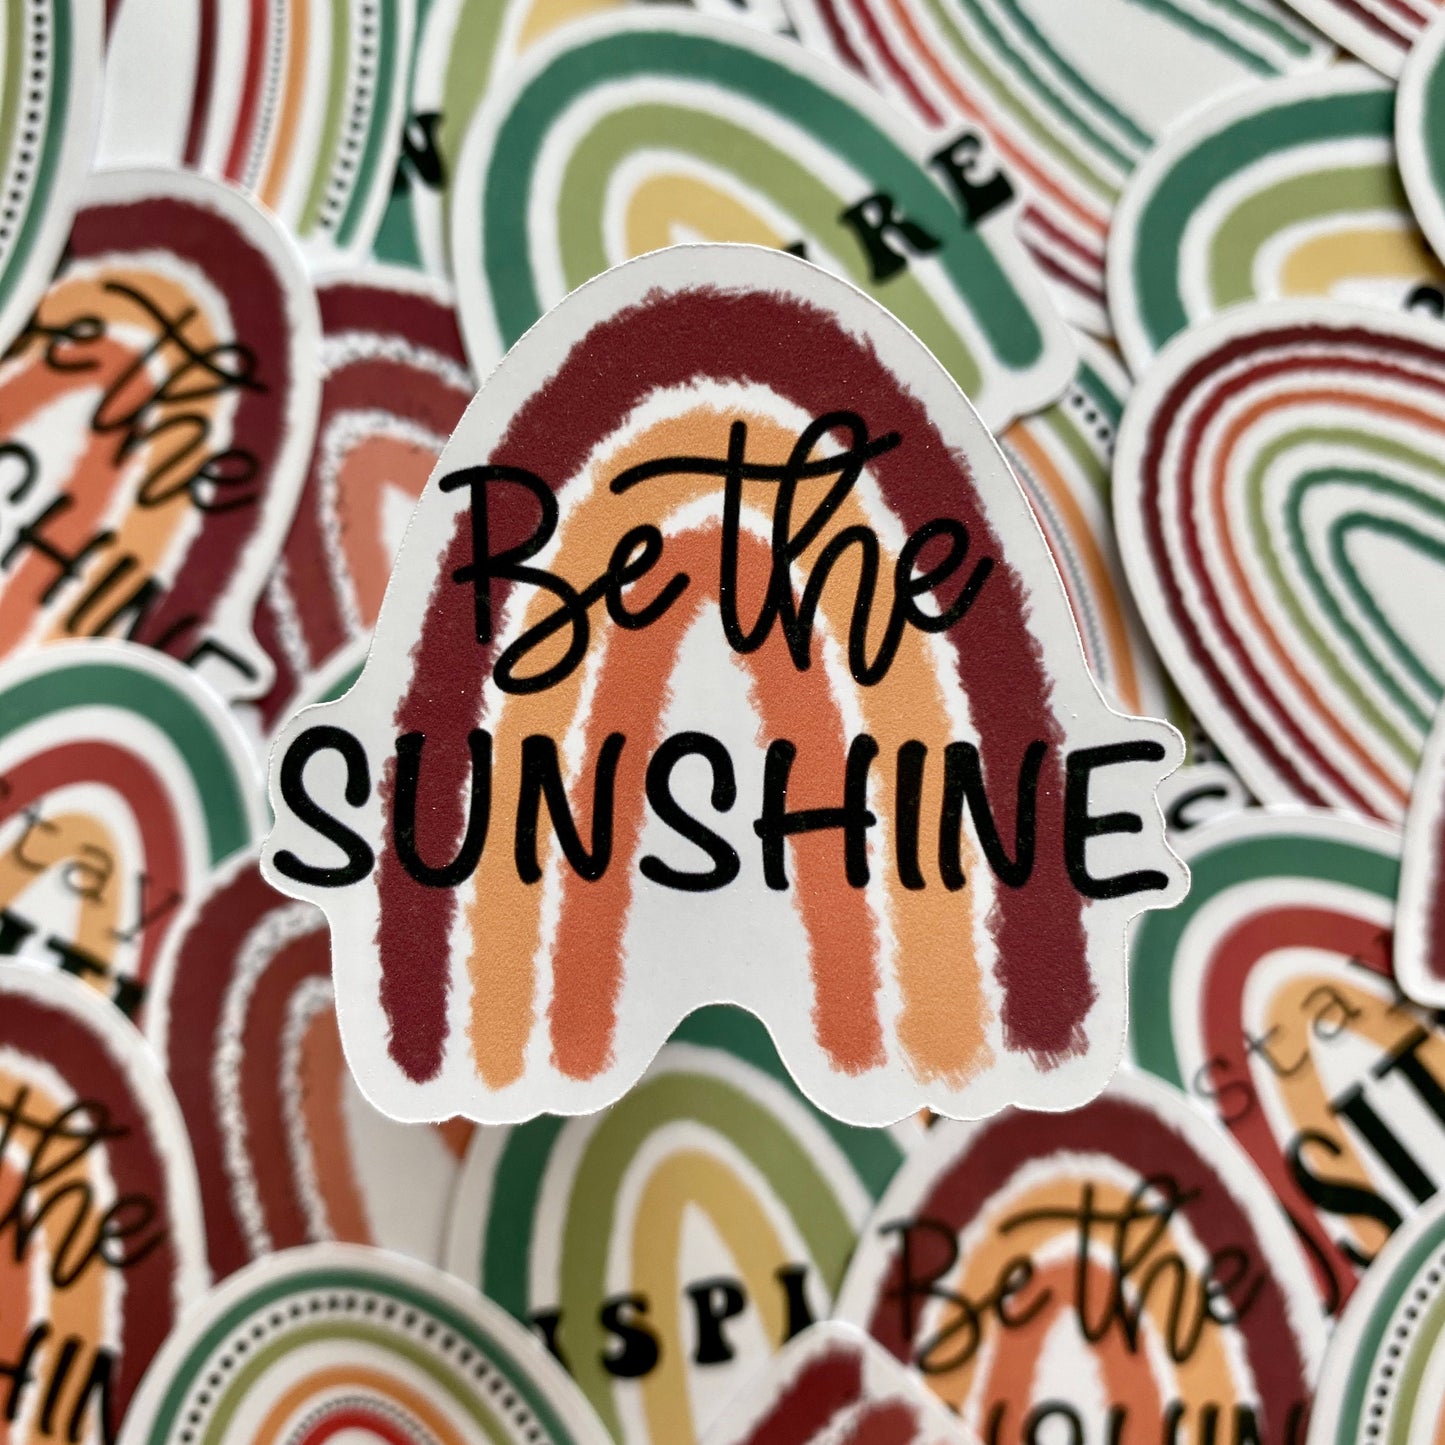 Rainbow Boho quote - sticker set of 6